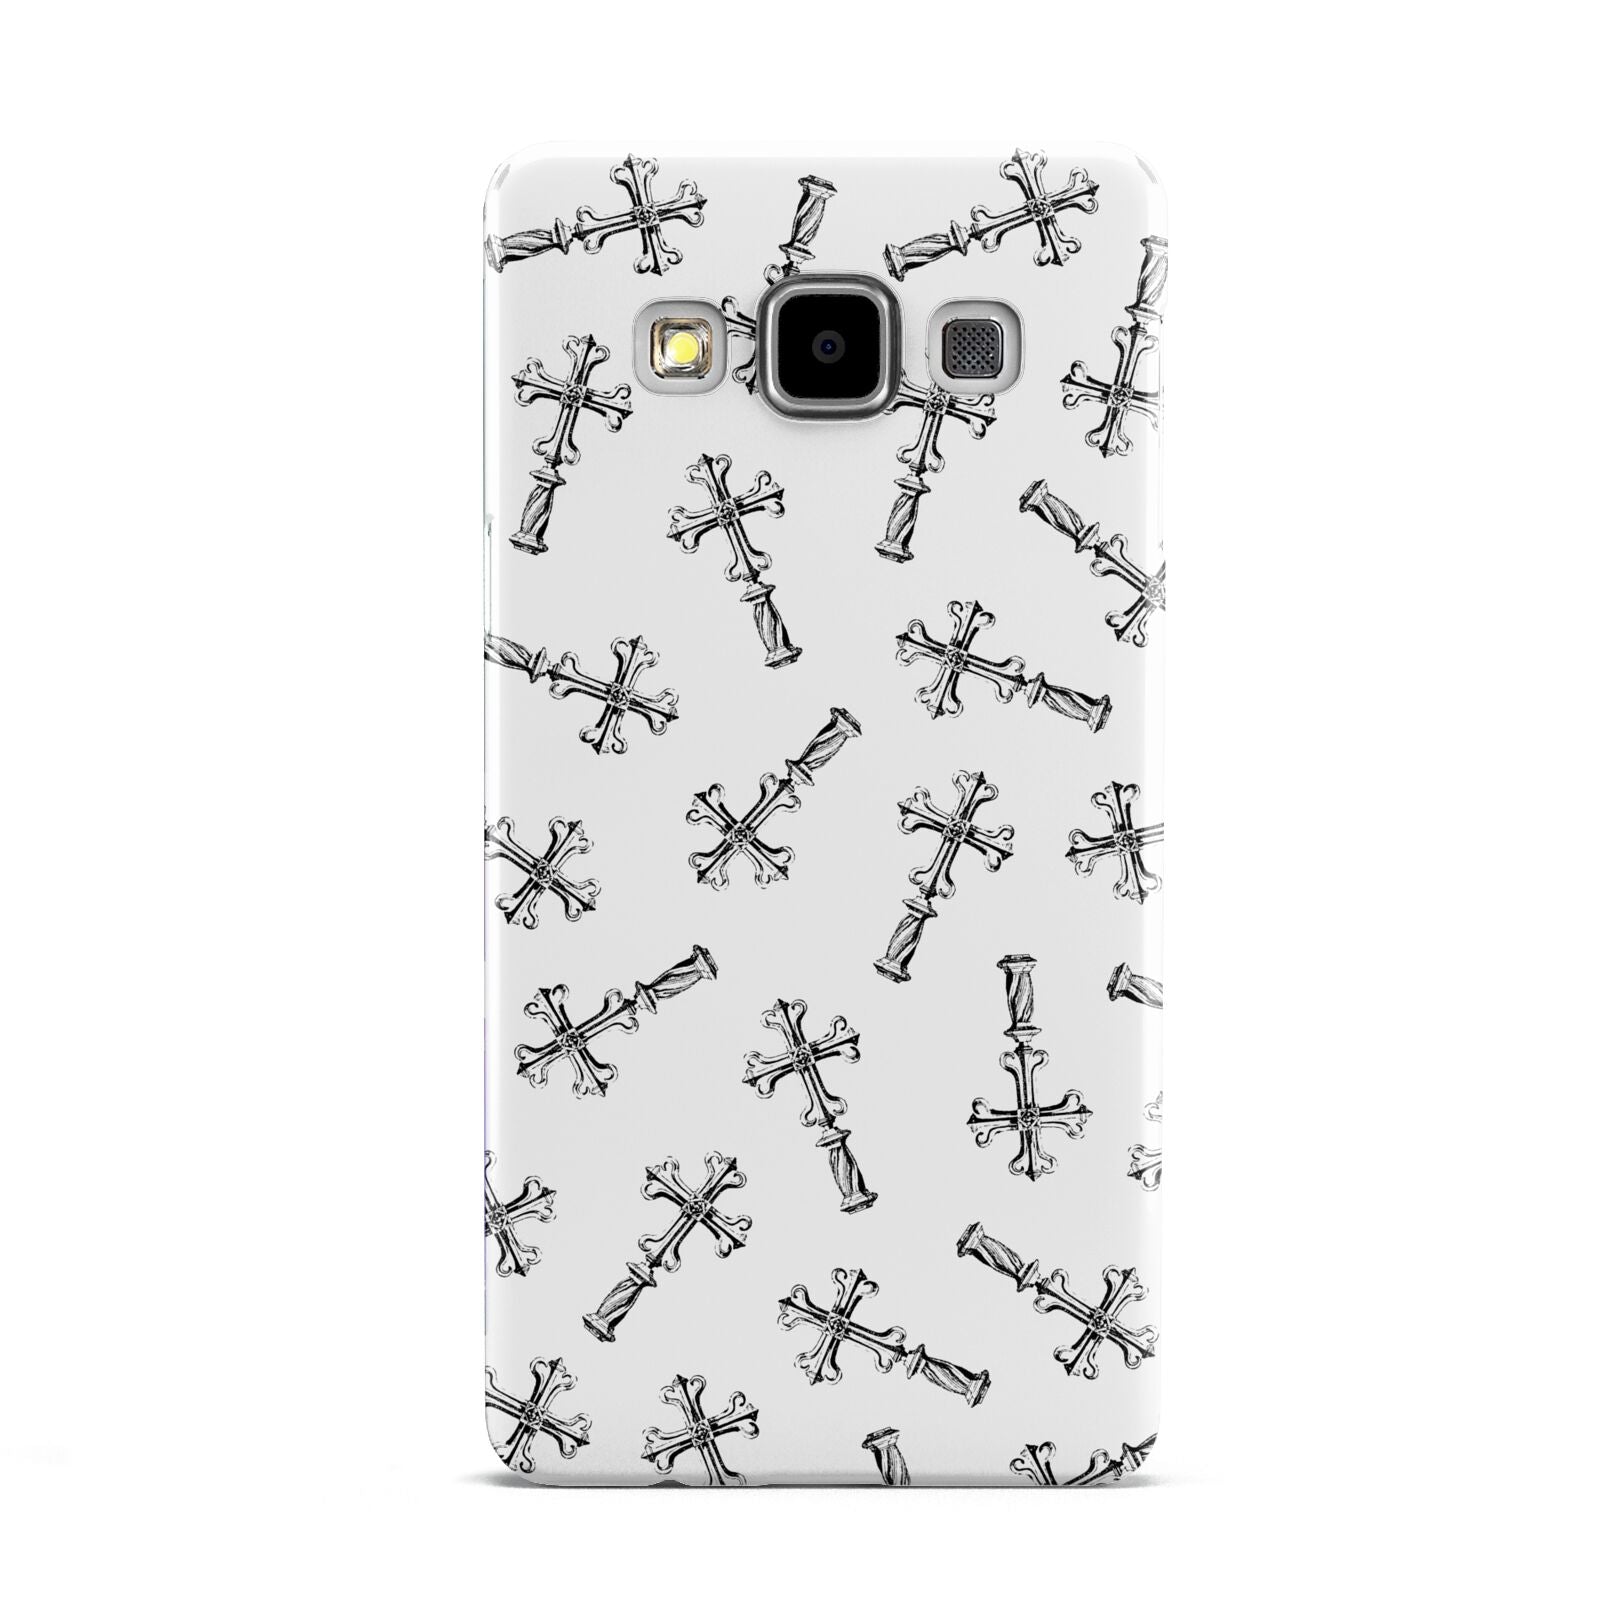 Monochrome Crosses Samsung Galaxy A5 Case